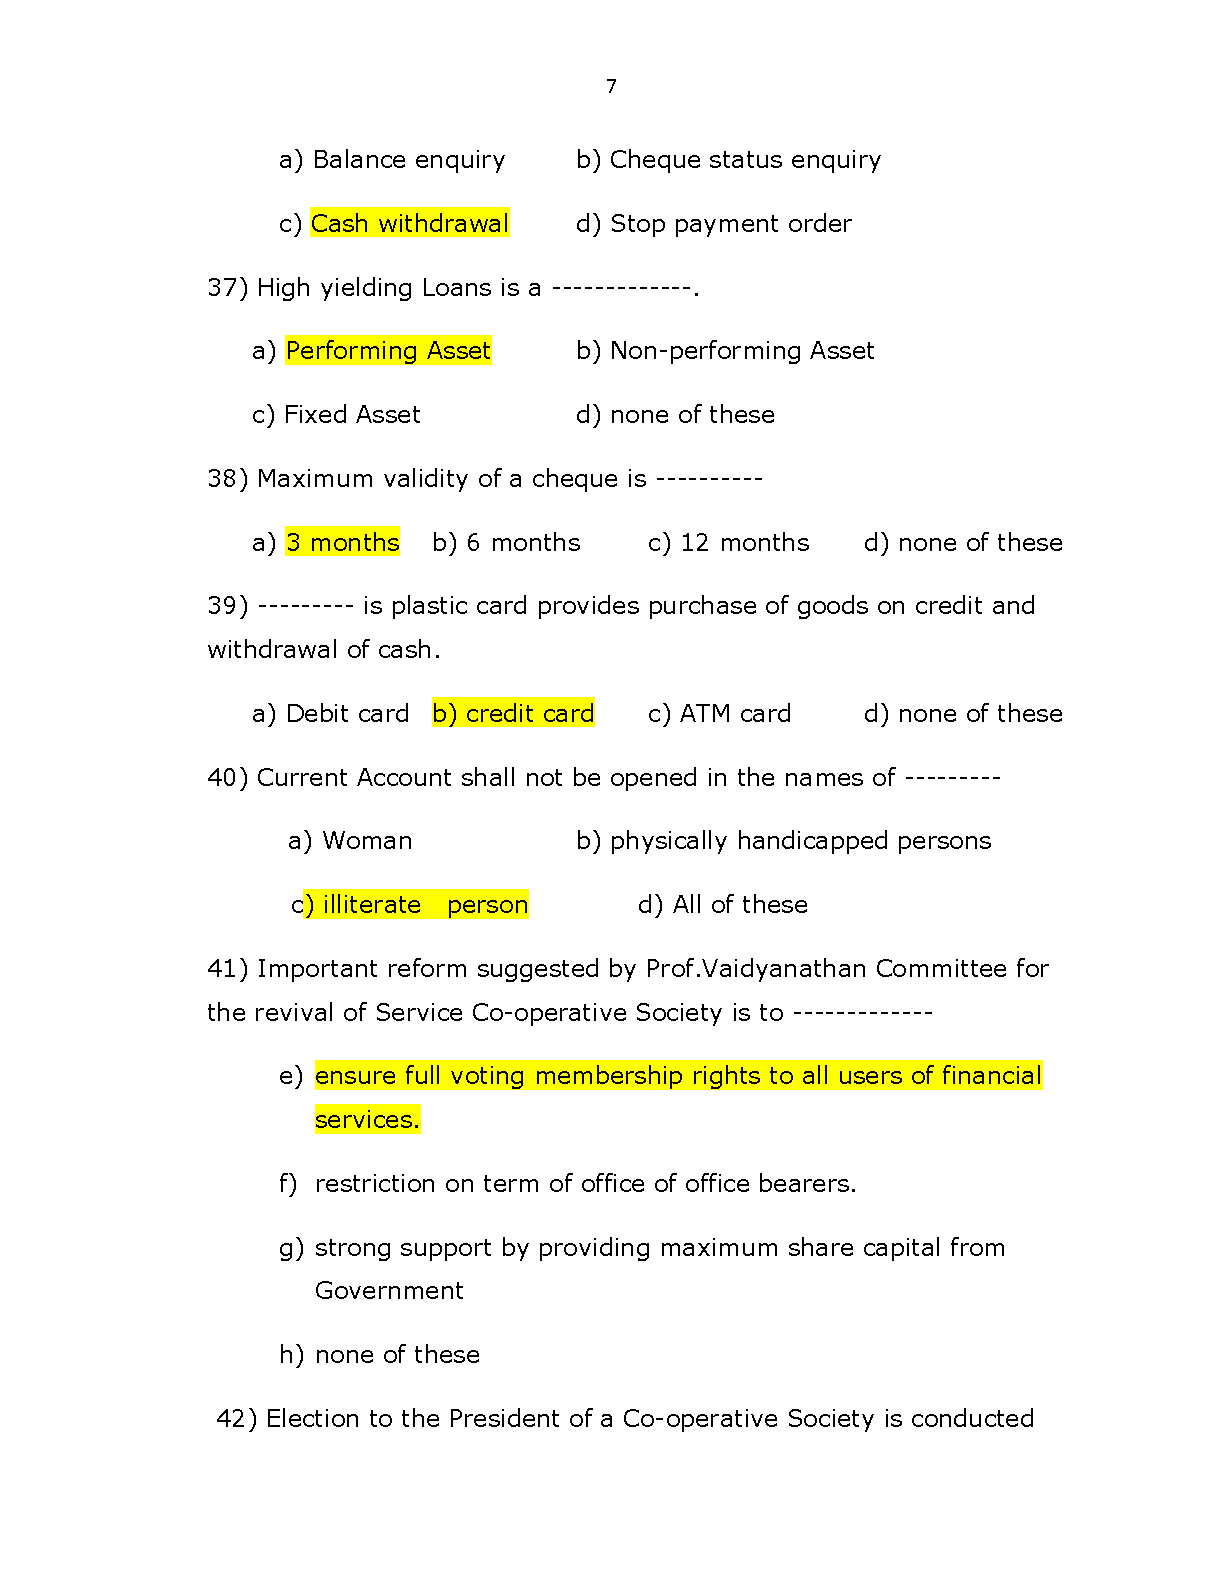 Kerala Co operative bank recruitment Sample Question Paper - Notification Image 7